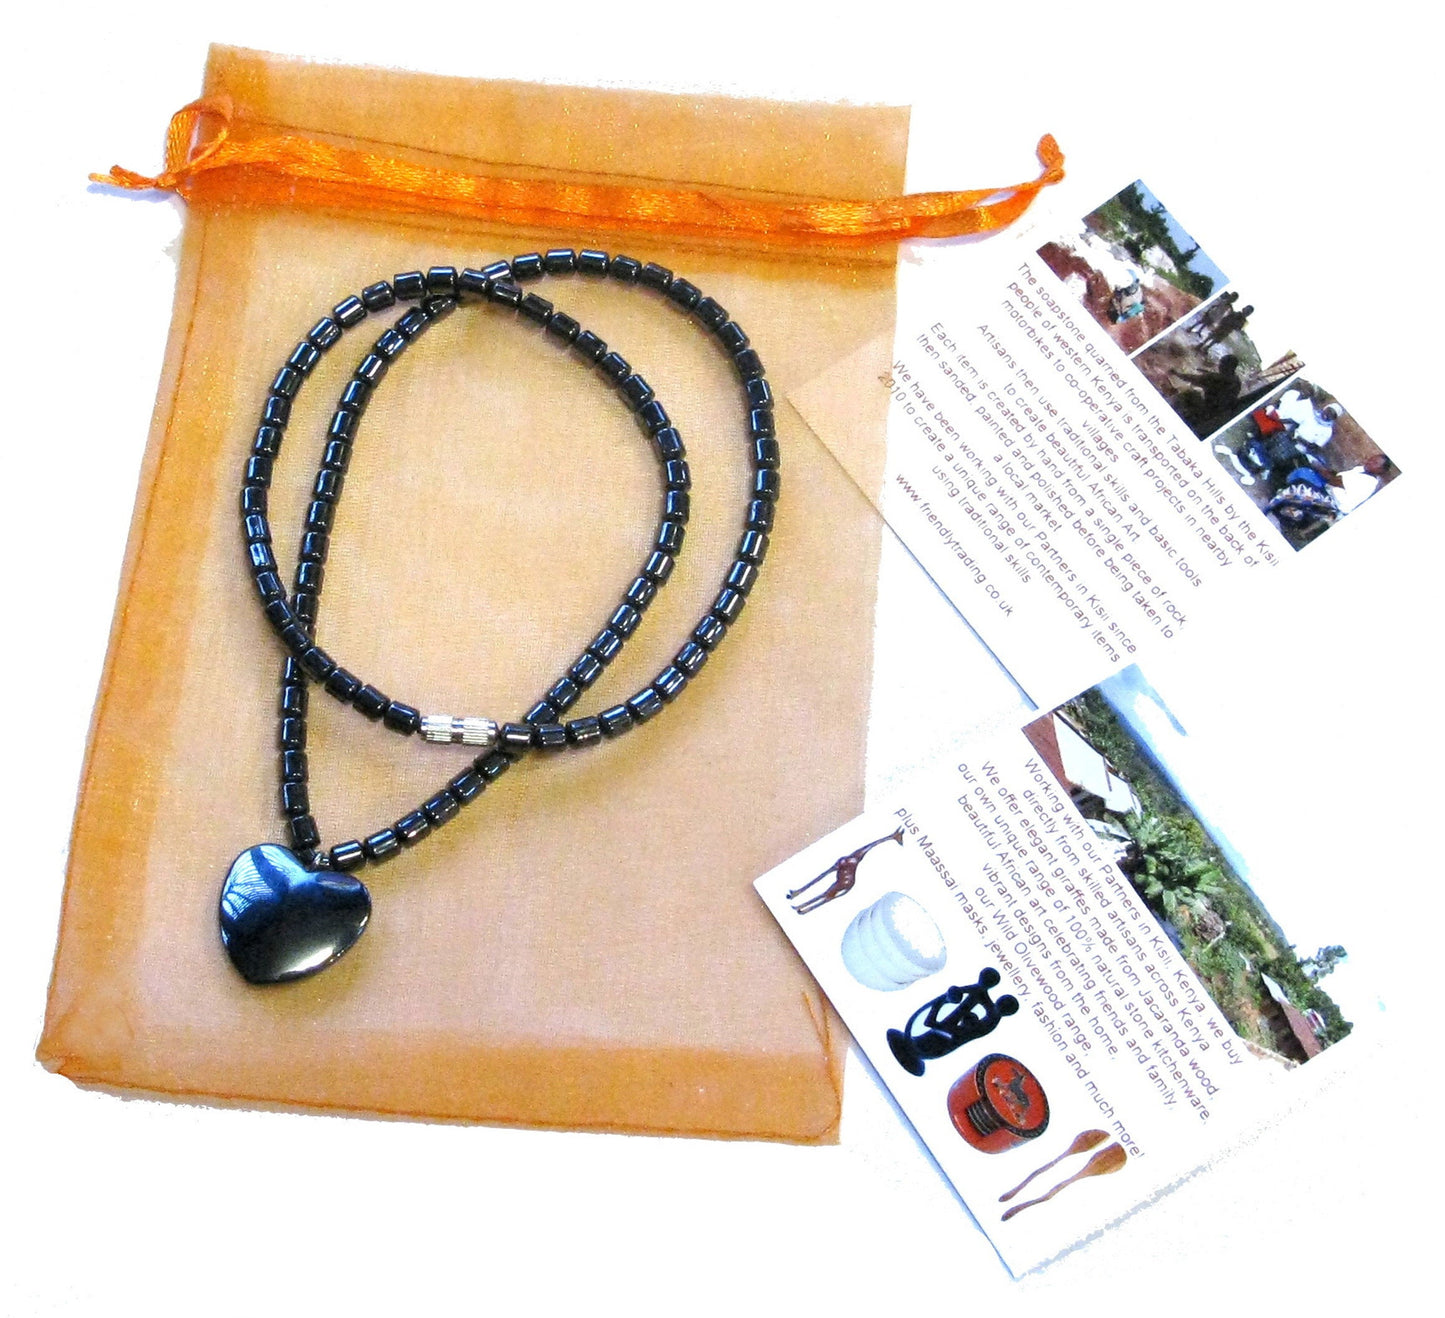 Hematite Healing Energy Anti-Stress Necklace 18" / 45 cm Golden Horn Pendant Handmade + Presentation Pouch & Storycard